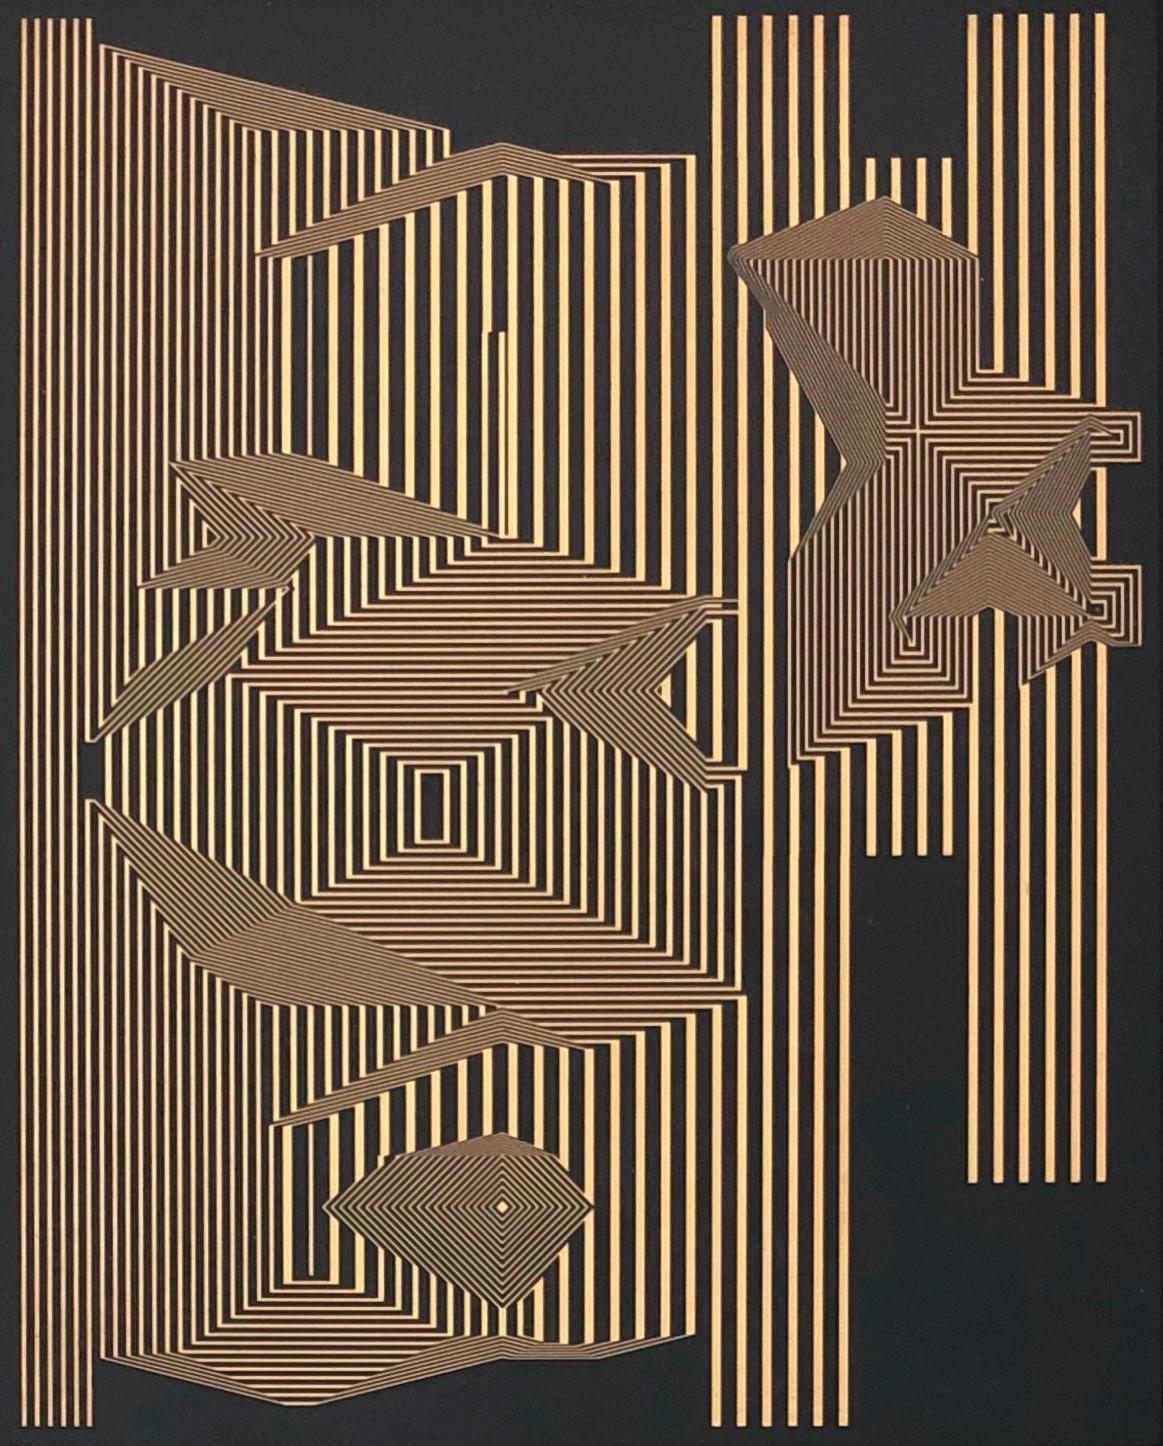 Untitled.  From Mexican Ryōan-ji Series - Abstract Mixed Media Art by Francisco Larios